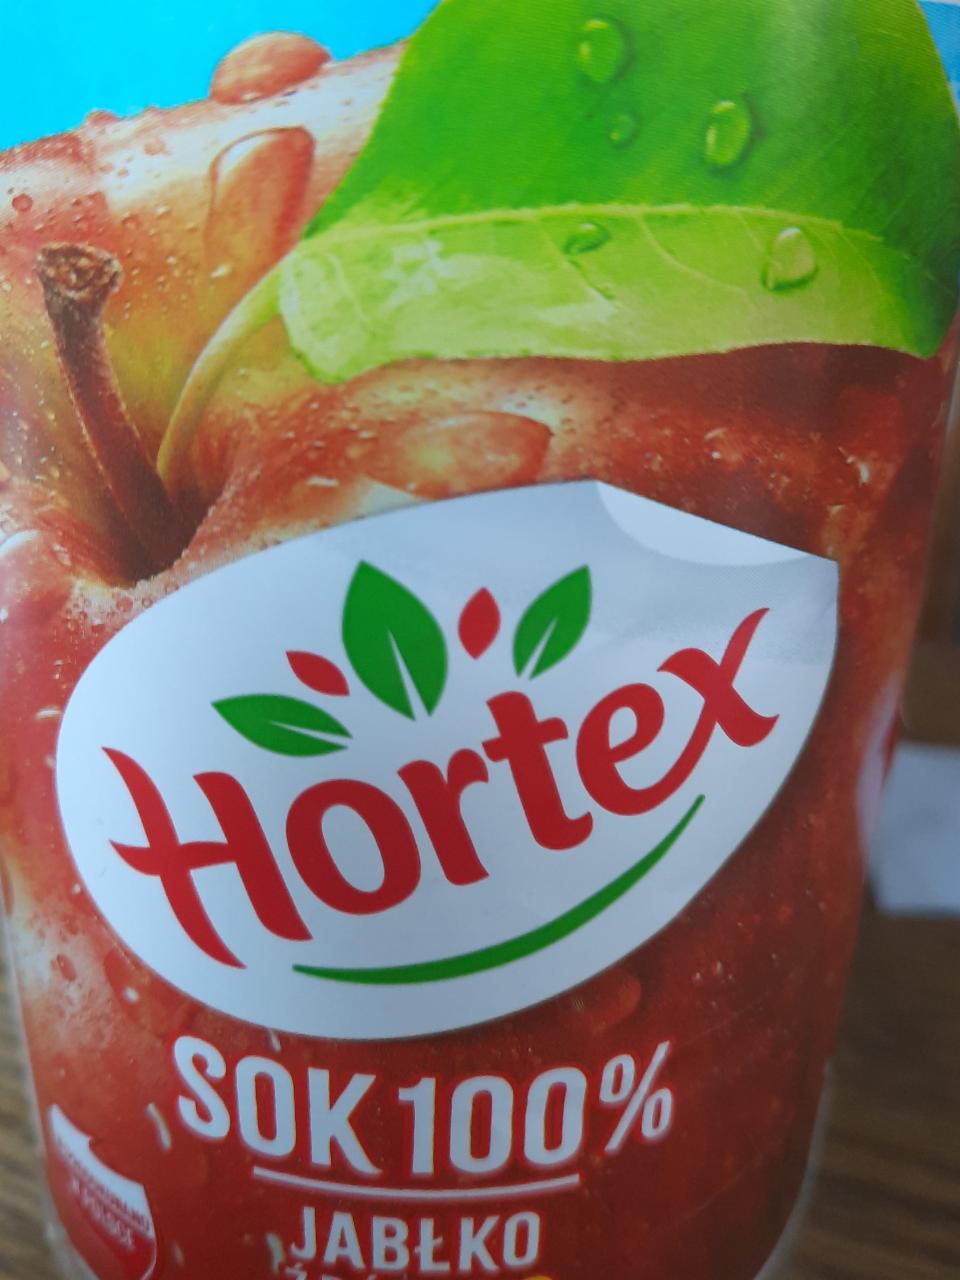 Zdjęcia - Hortex Sok 100% jabłko 1 l